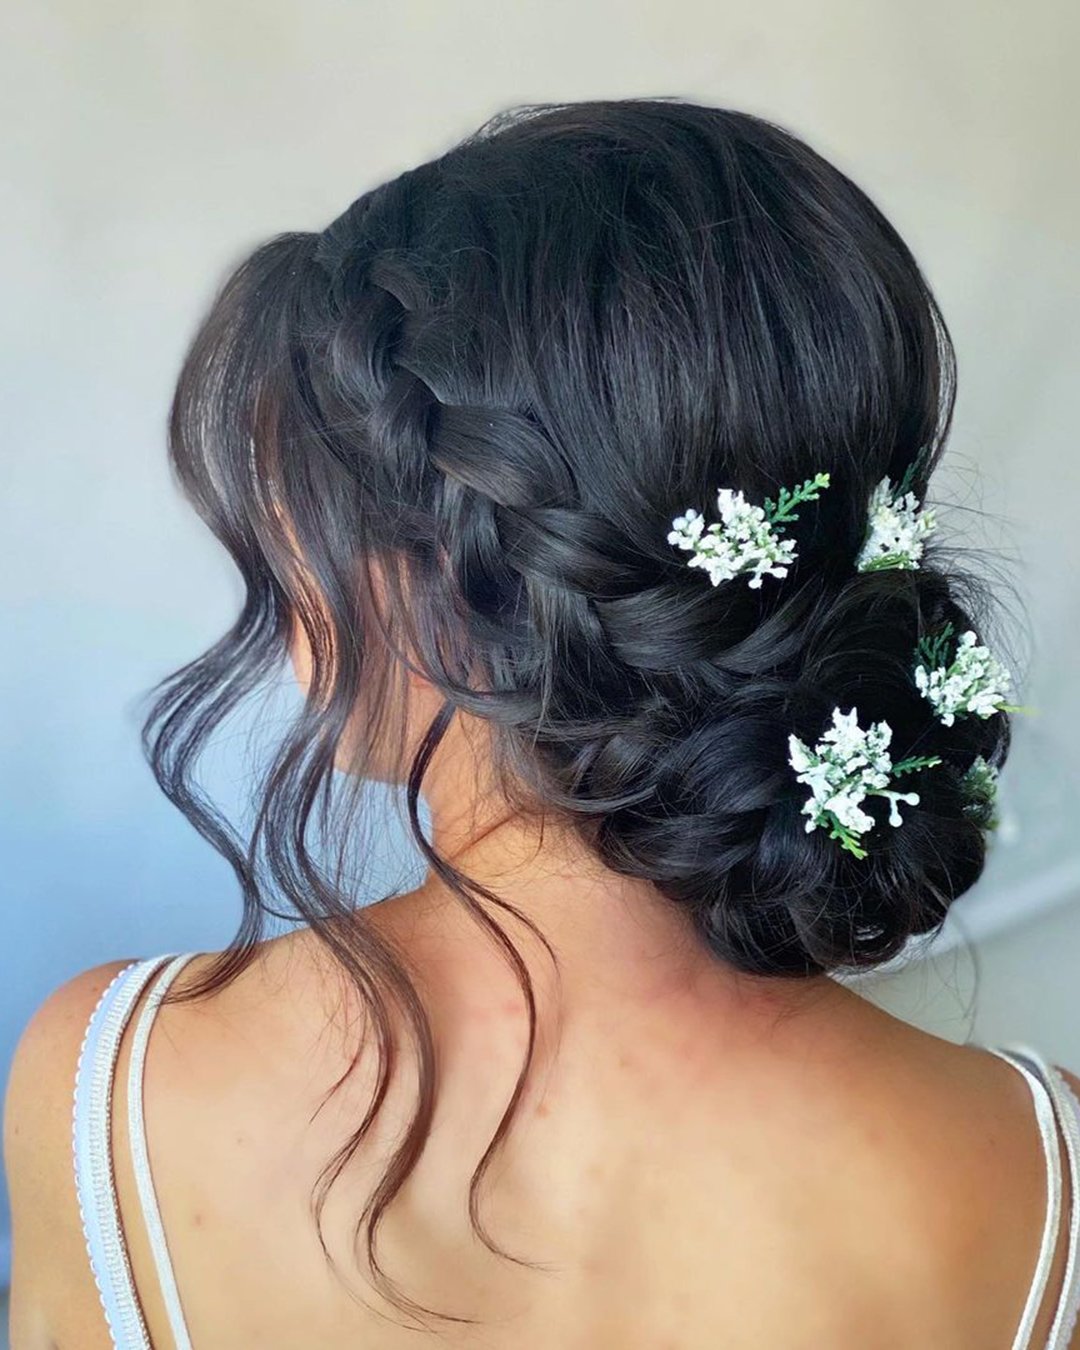 rustic wedding hairstyles braided updo with ehite flowers monamieweddinghair